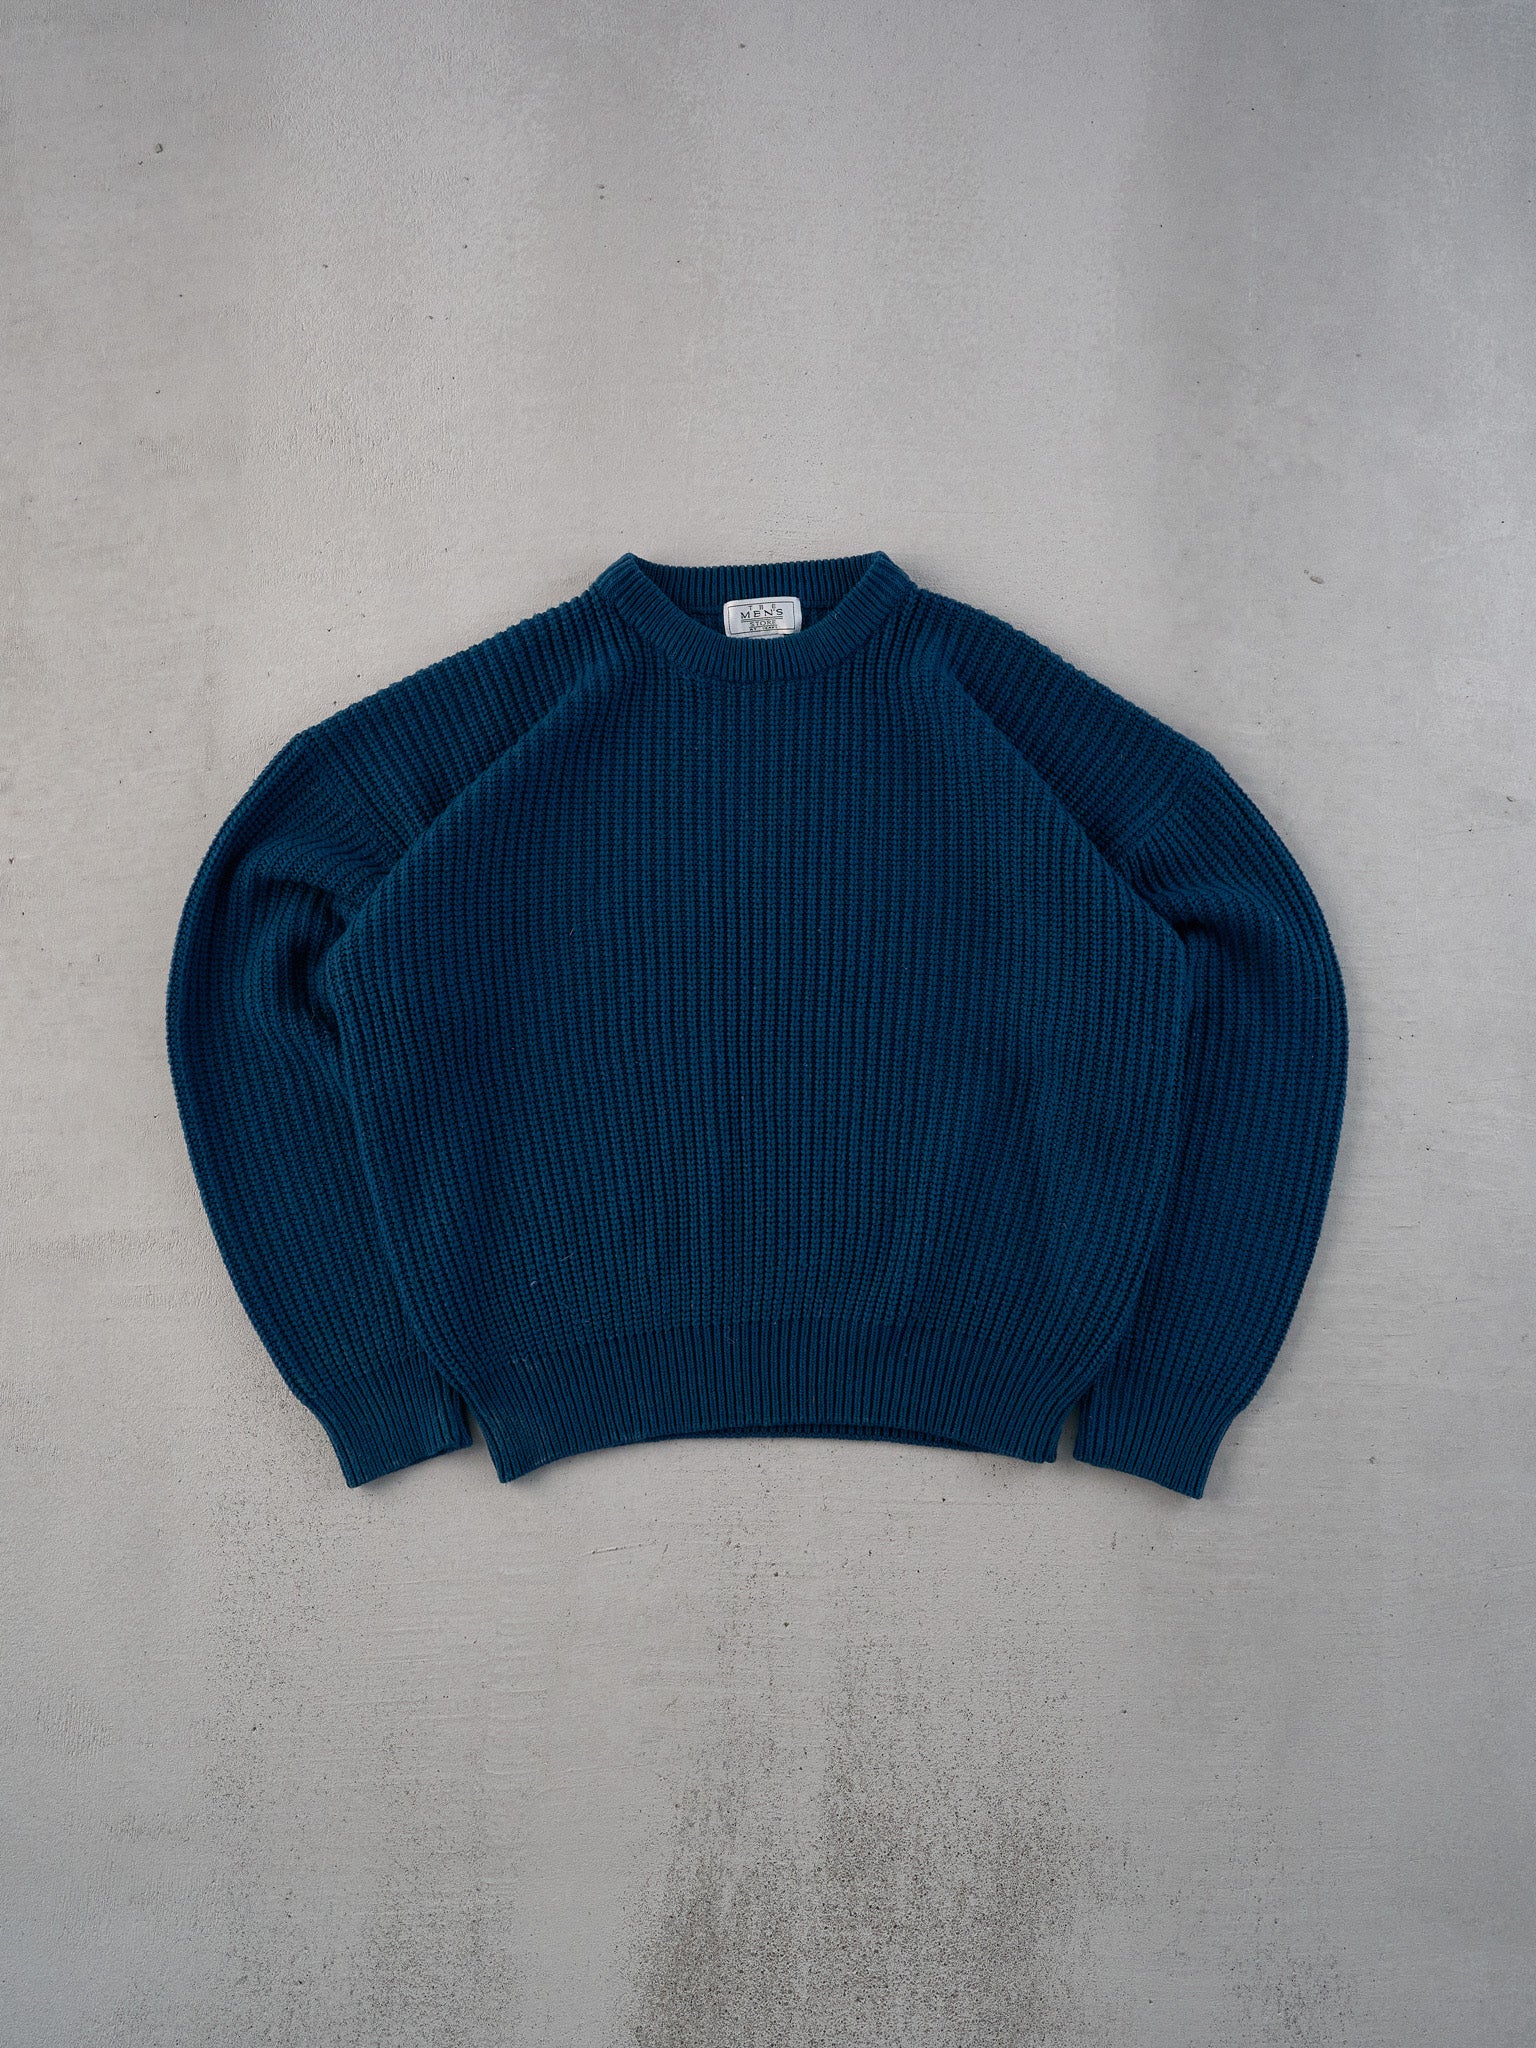 Vintage 70s Teal Blue Sears Knit Sweater (M/L)